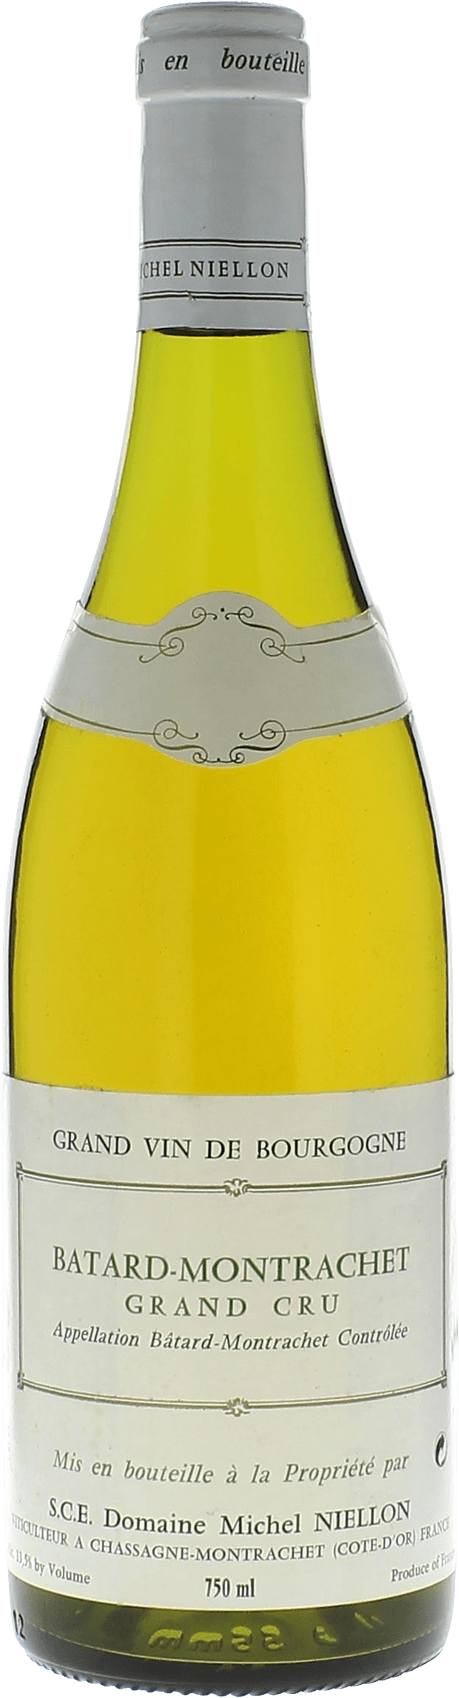 Batard montrachet grand cru 2007 Domaine NIELLON Michel, Bourgogne blanc